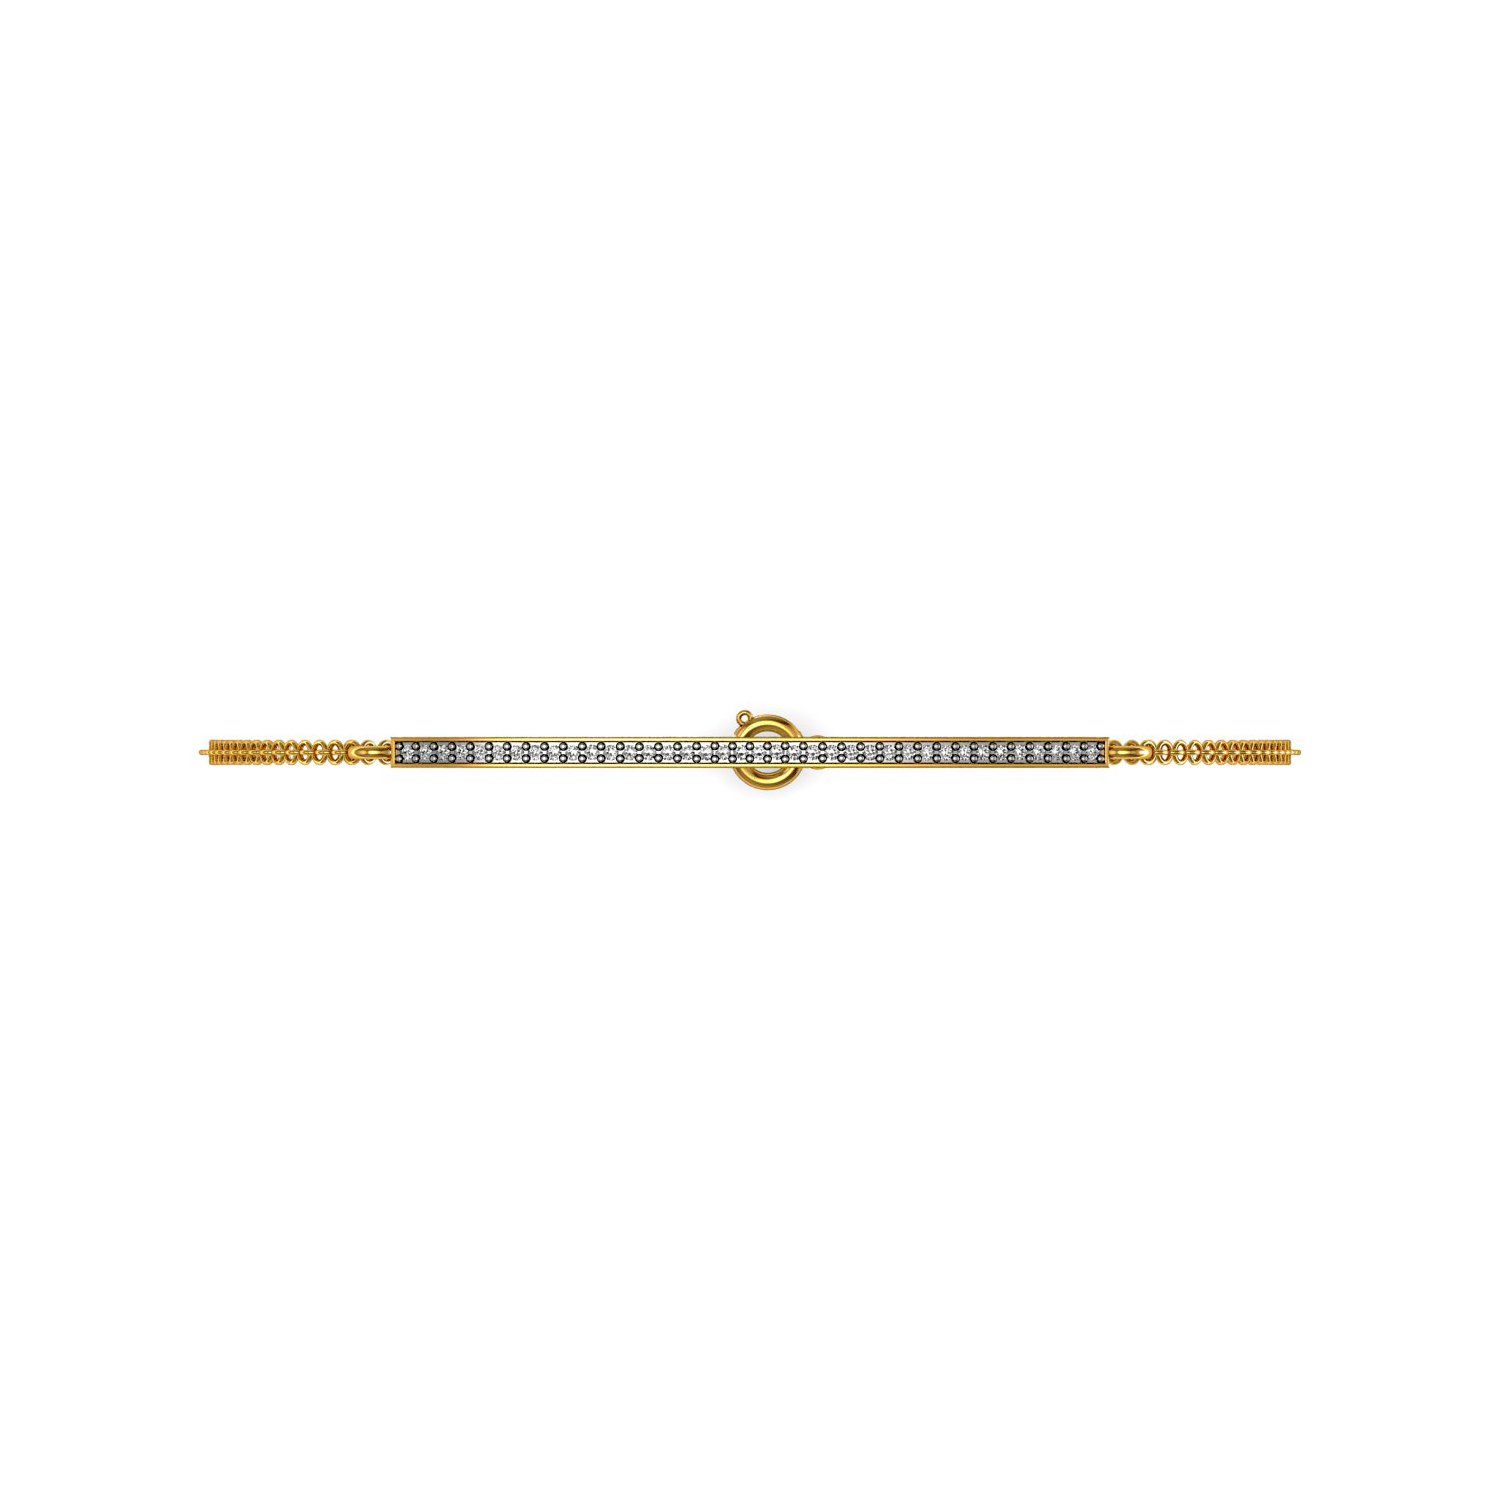 Solid gold real diamond bar chain bracelet